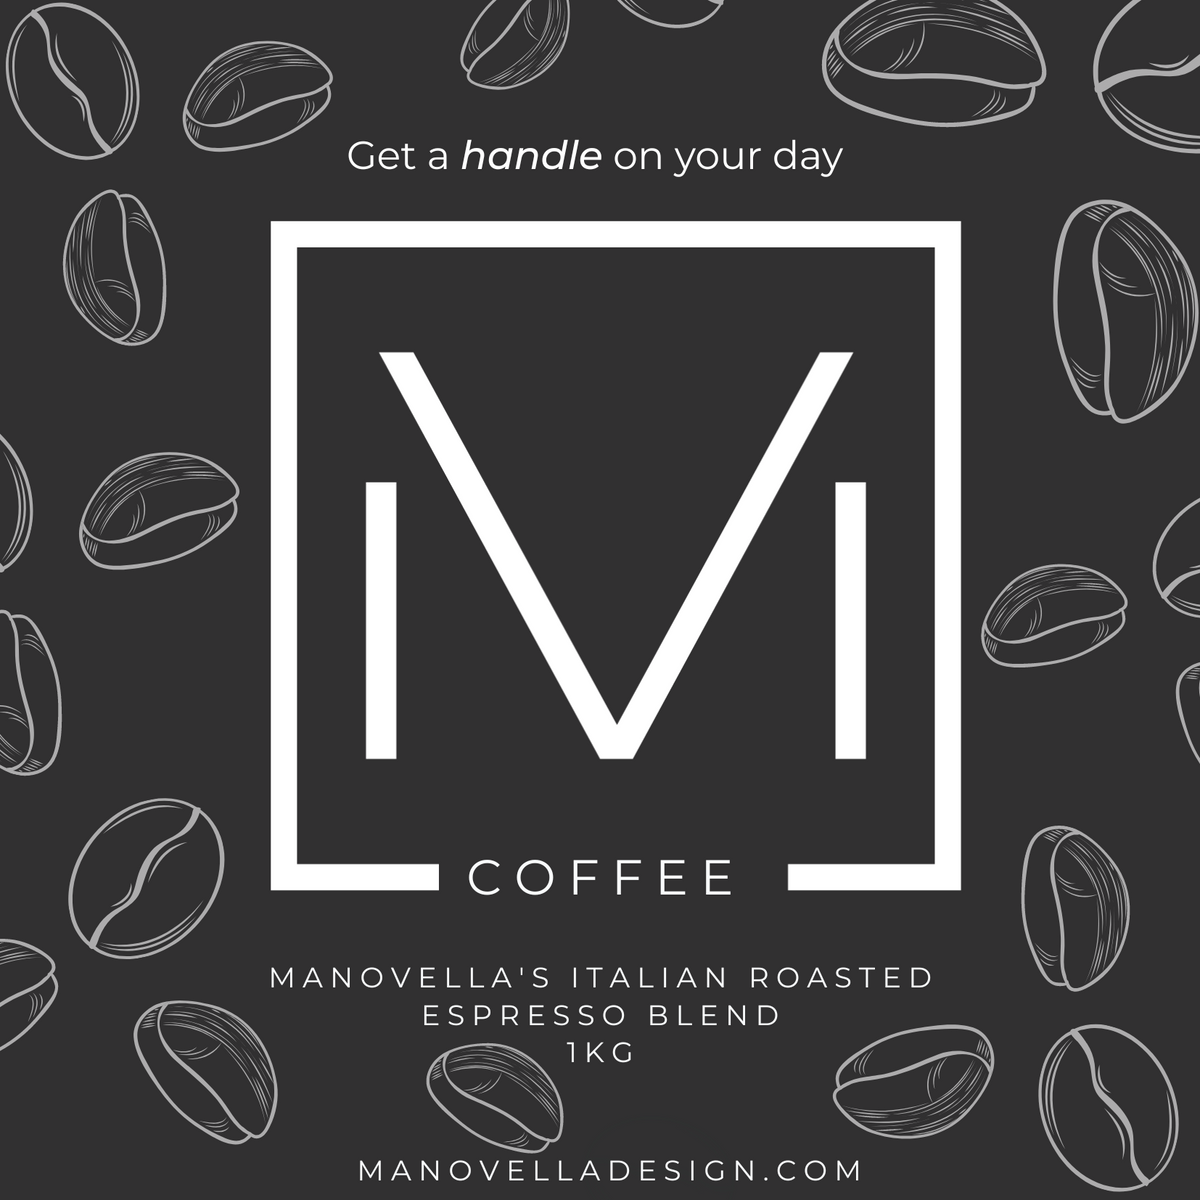 Manovella&#39;s Italian Roasted Espresso Blend - 1KG Whole Coffee Beans